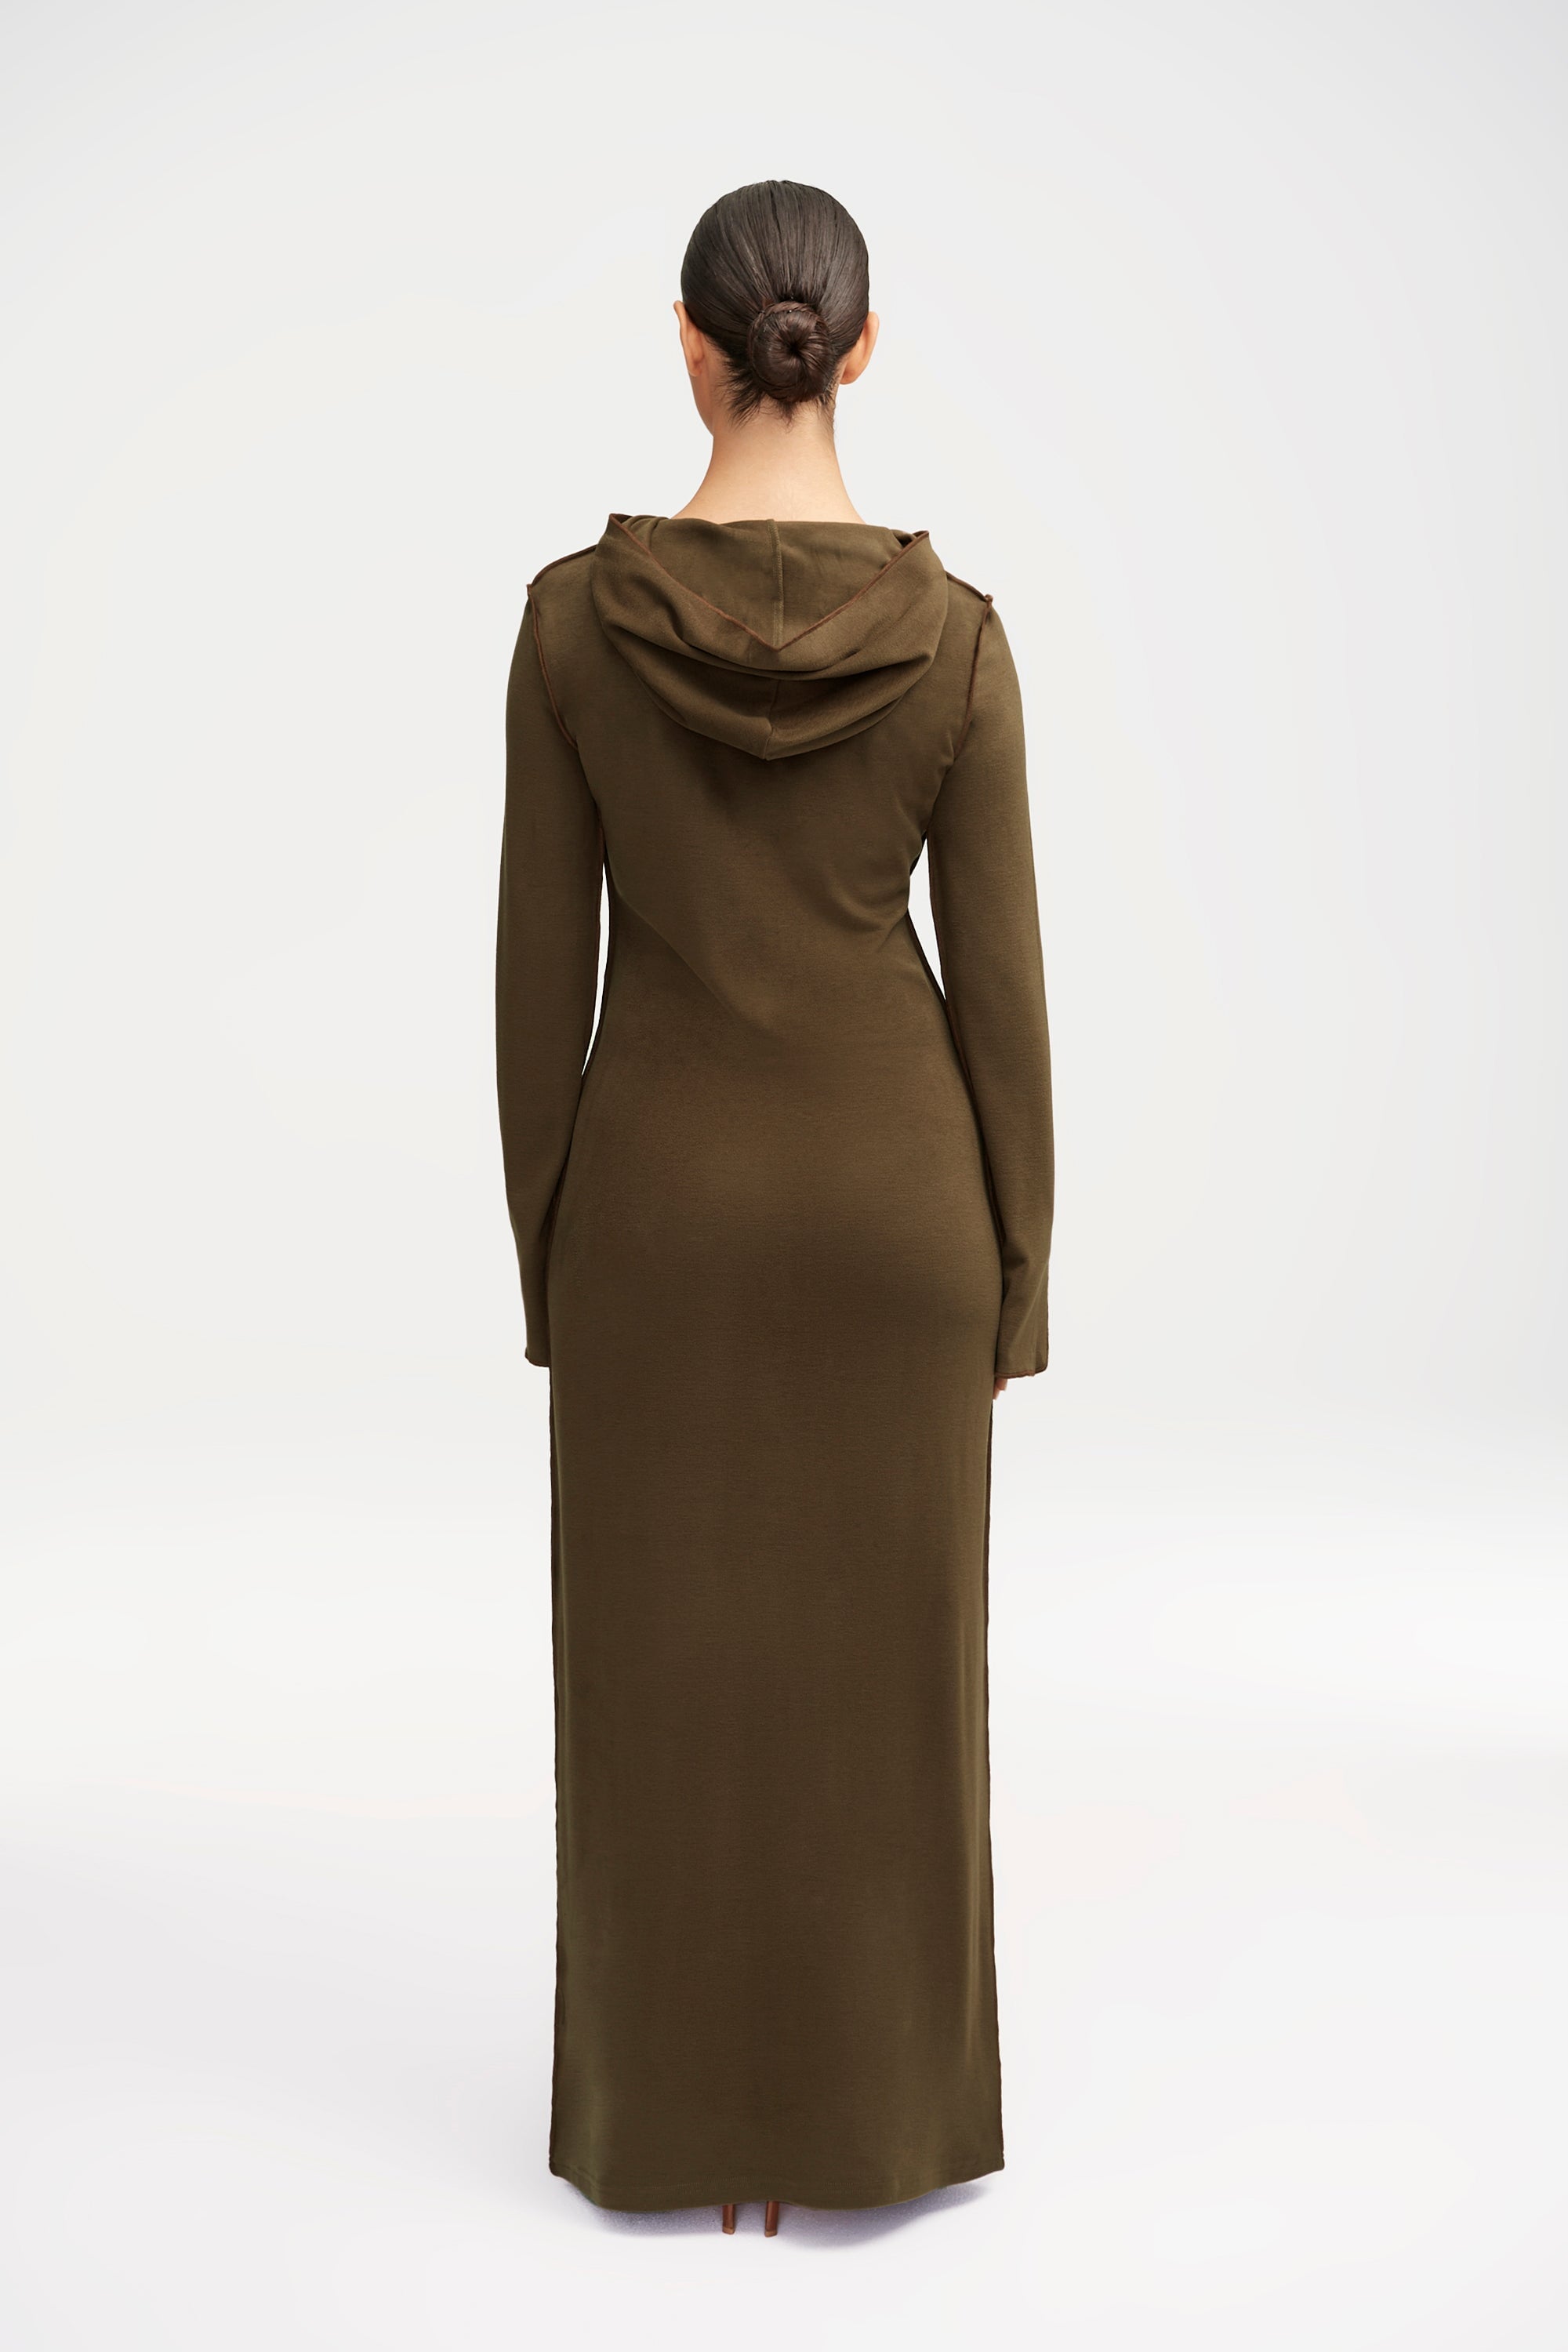 Ava Sweater Hoodie Maxi Dress - Dark Olive Clothing epschoolboard 